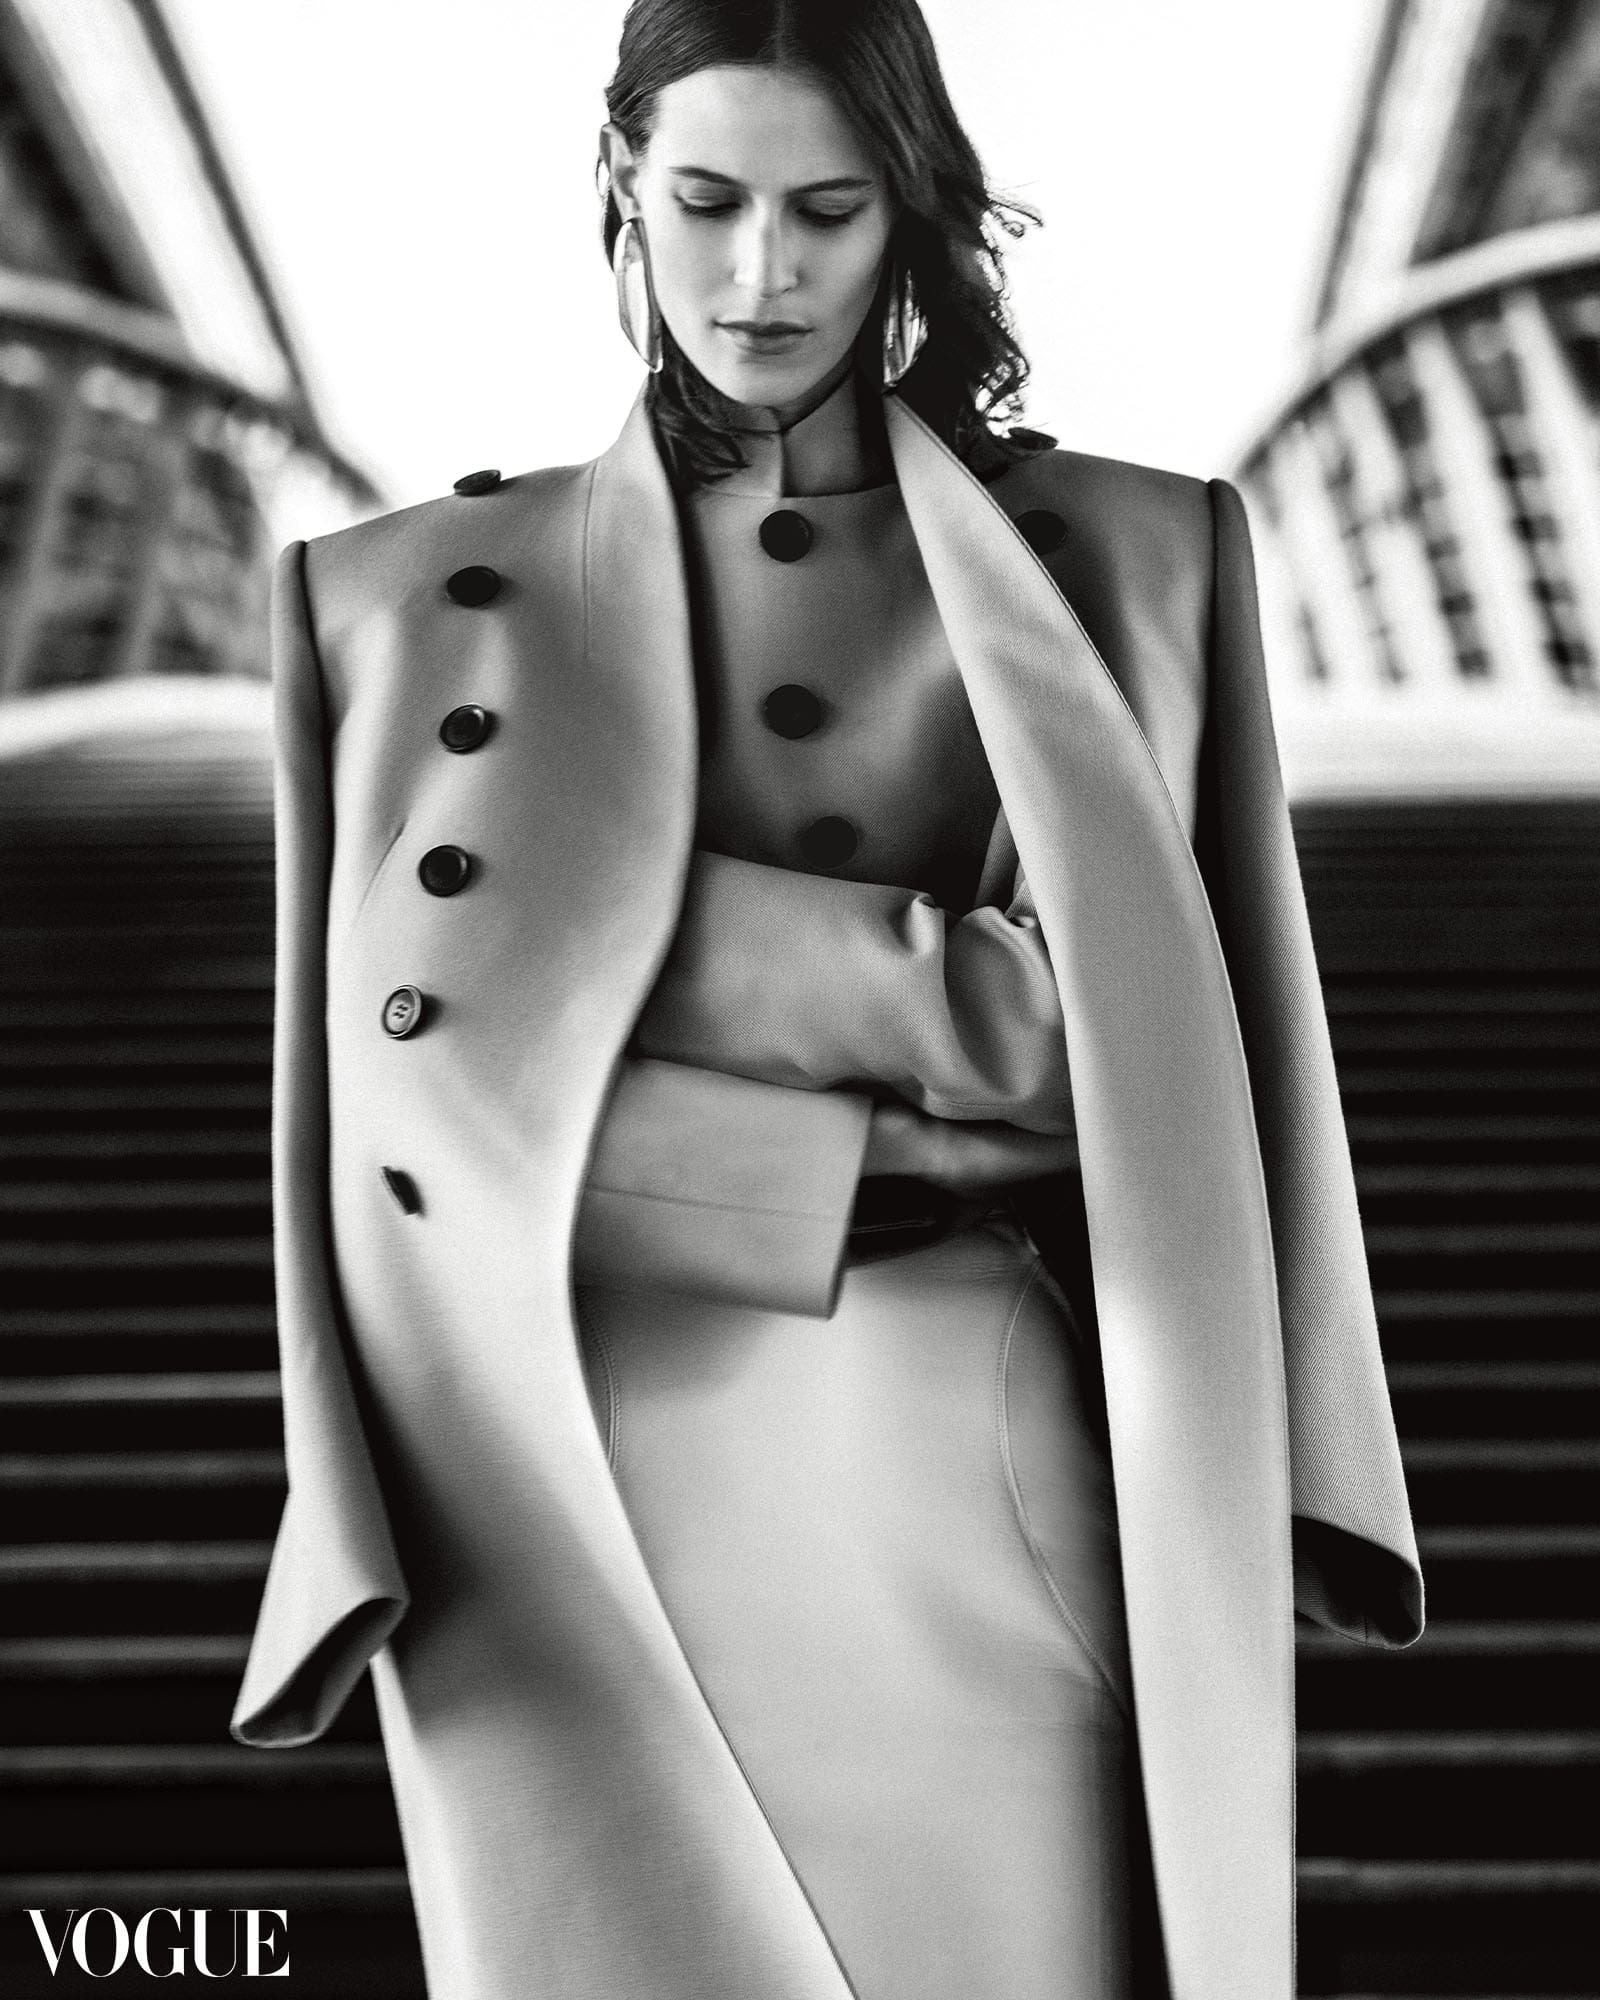 Model Jeane Cadieu wearing an Alaïa coat, jacket, skirt, and earrings.